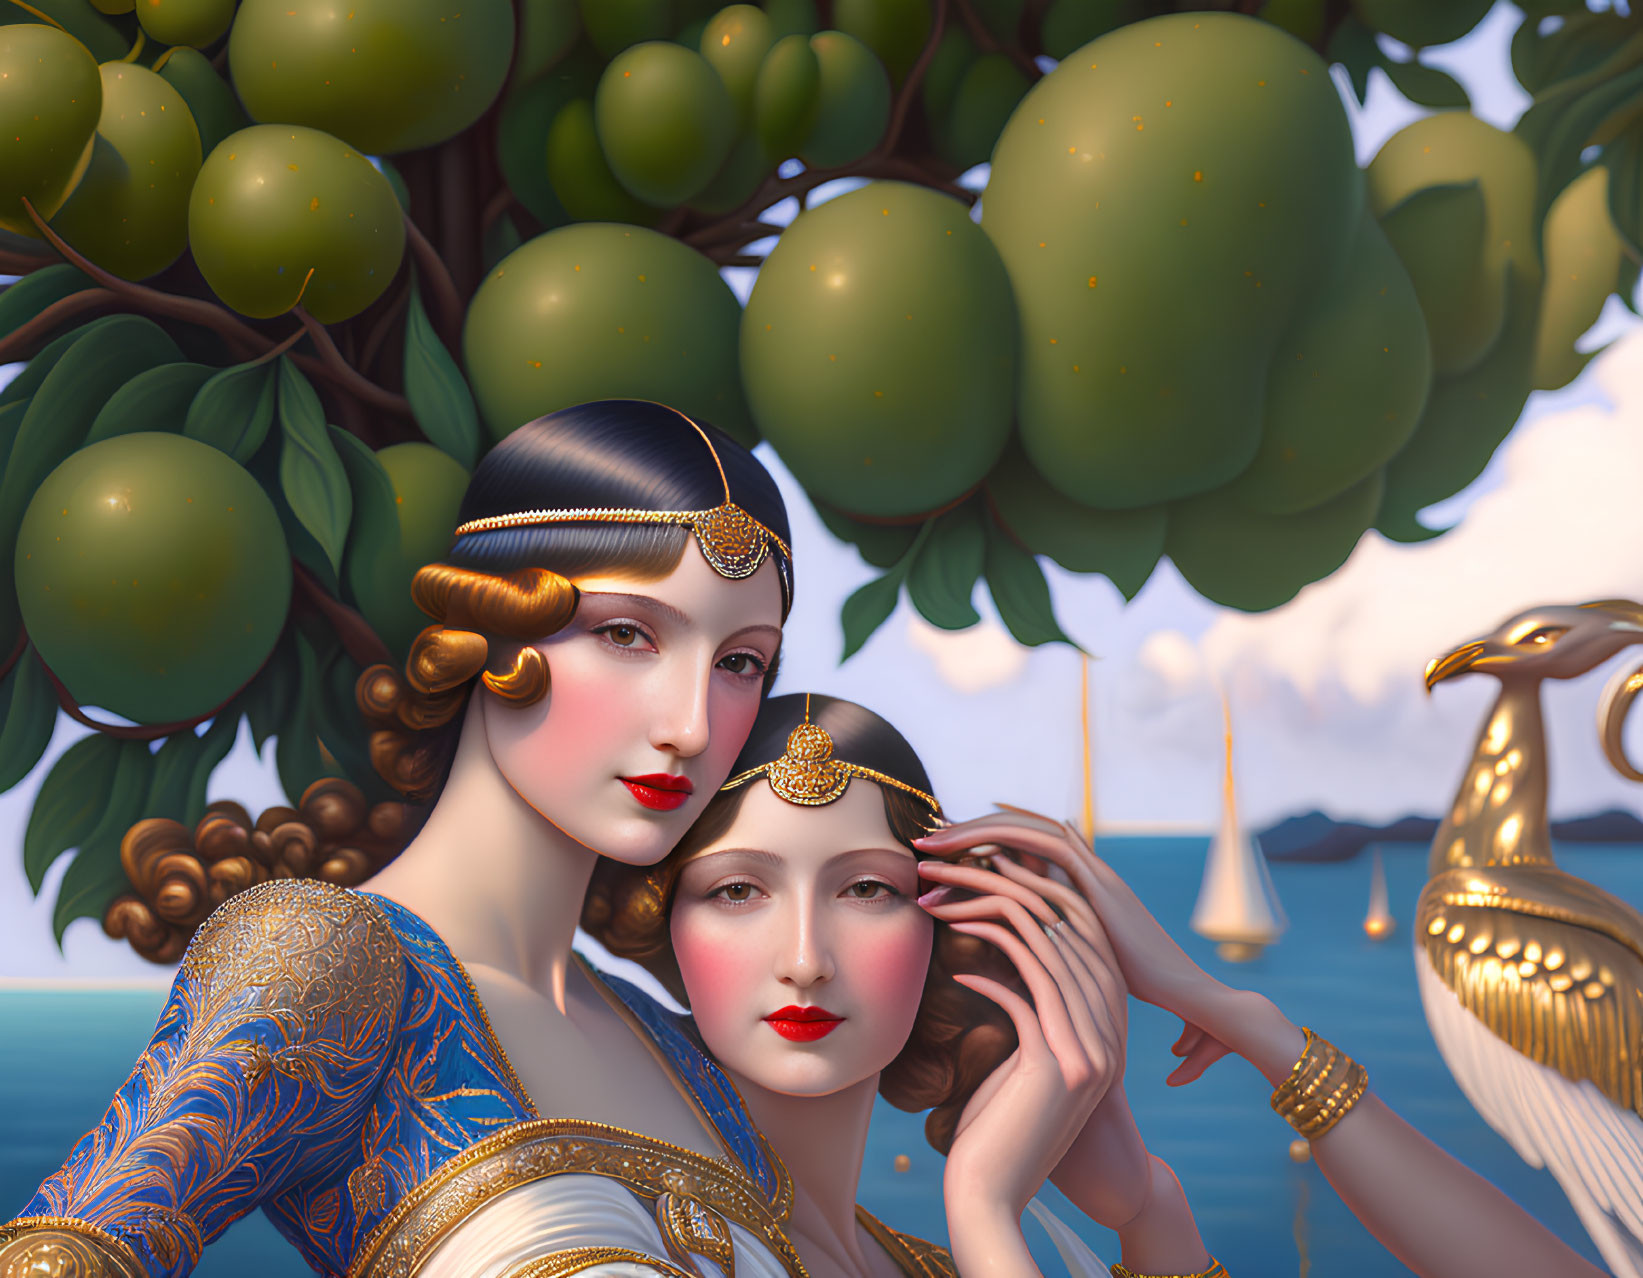 Stylized women with golden jewelry under a fruit tree by serene sea